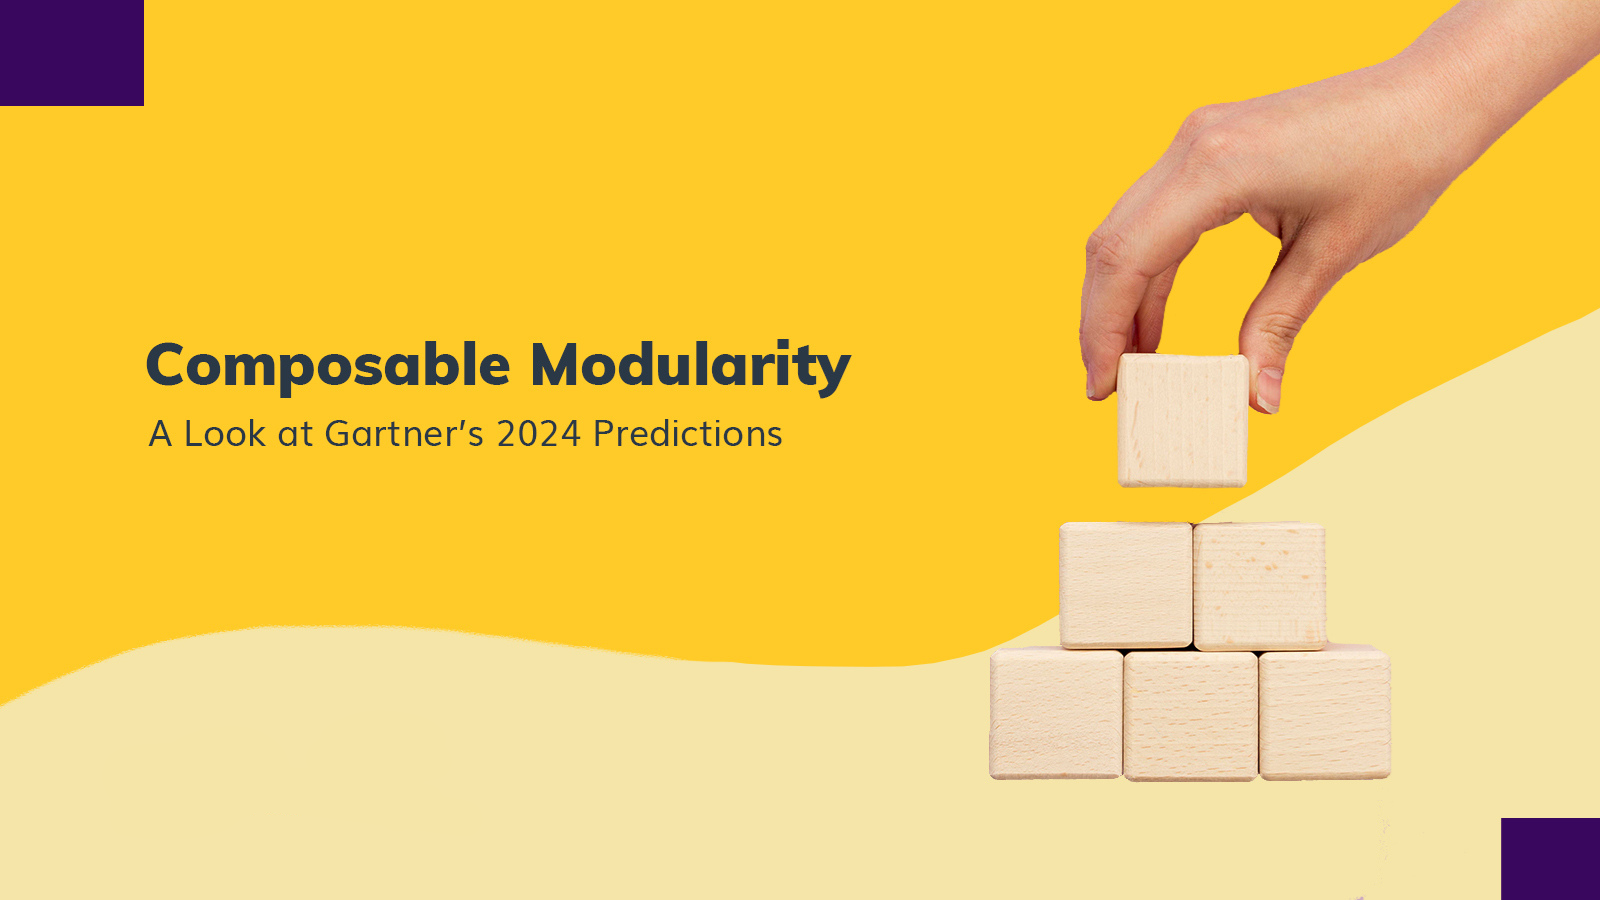 Gartner's Predictions on Composable Modularity